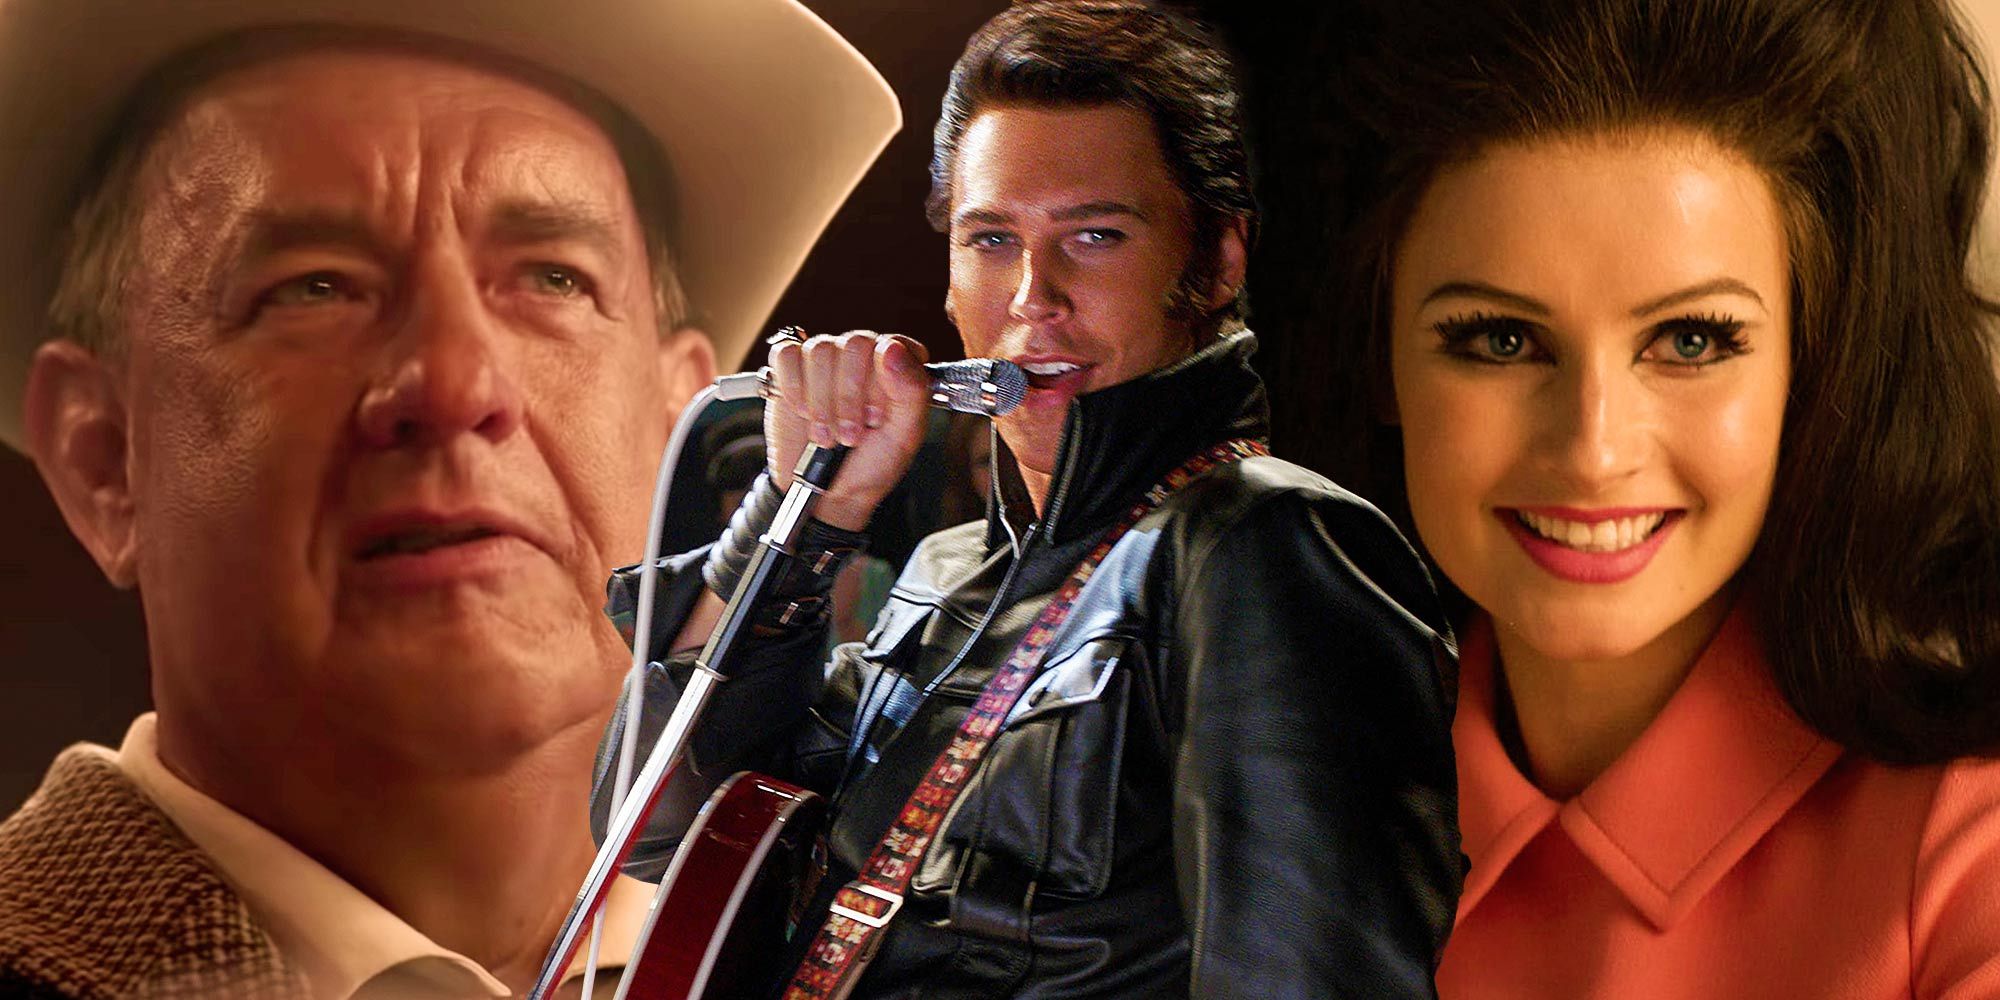 Elvis cast guide and comparison with Austin Butler, Tom Hanks